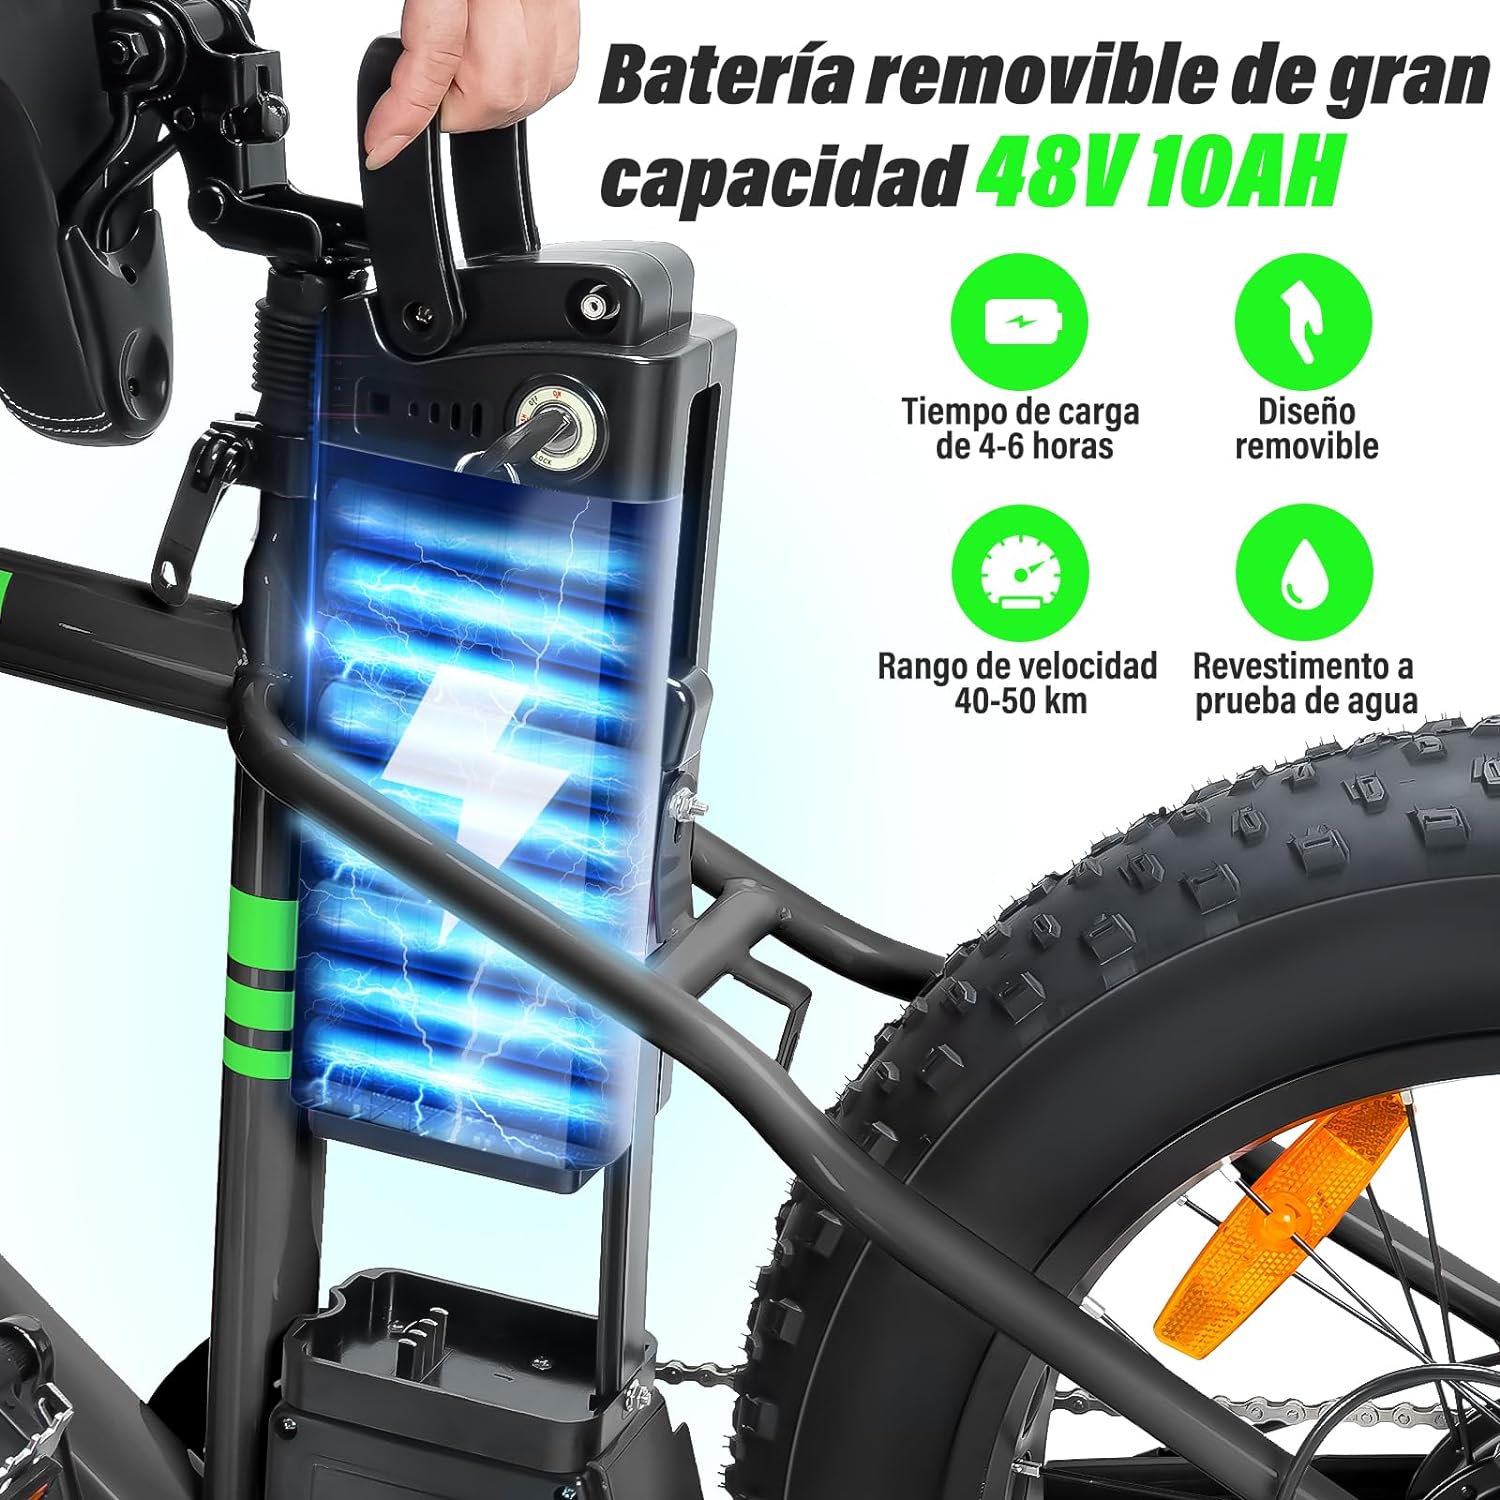 ¿Por qué convertir tu bicicleta a una eléctrica? - Quasar Mobility